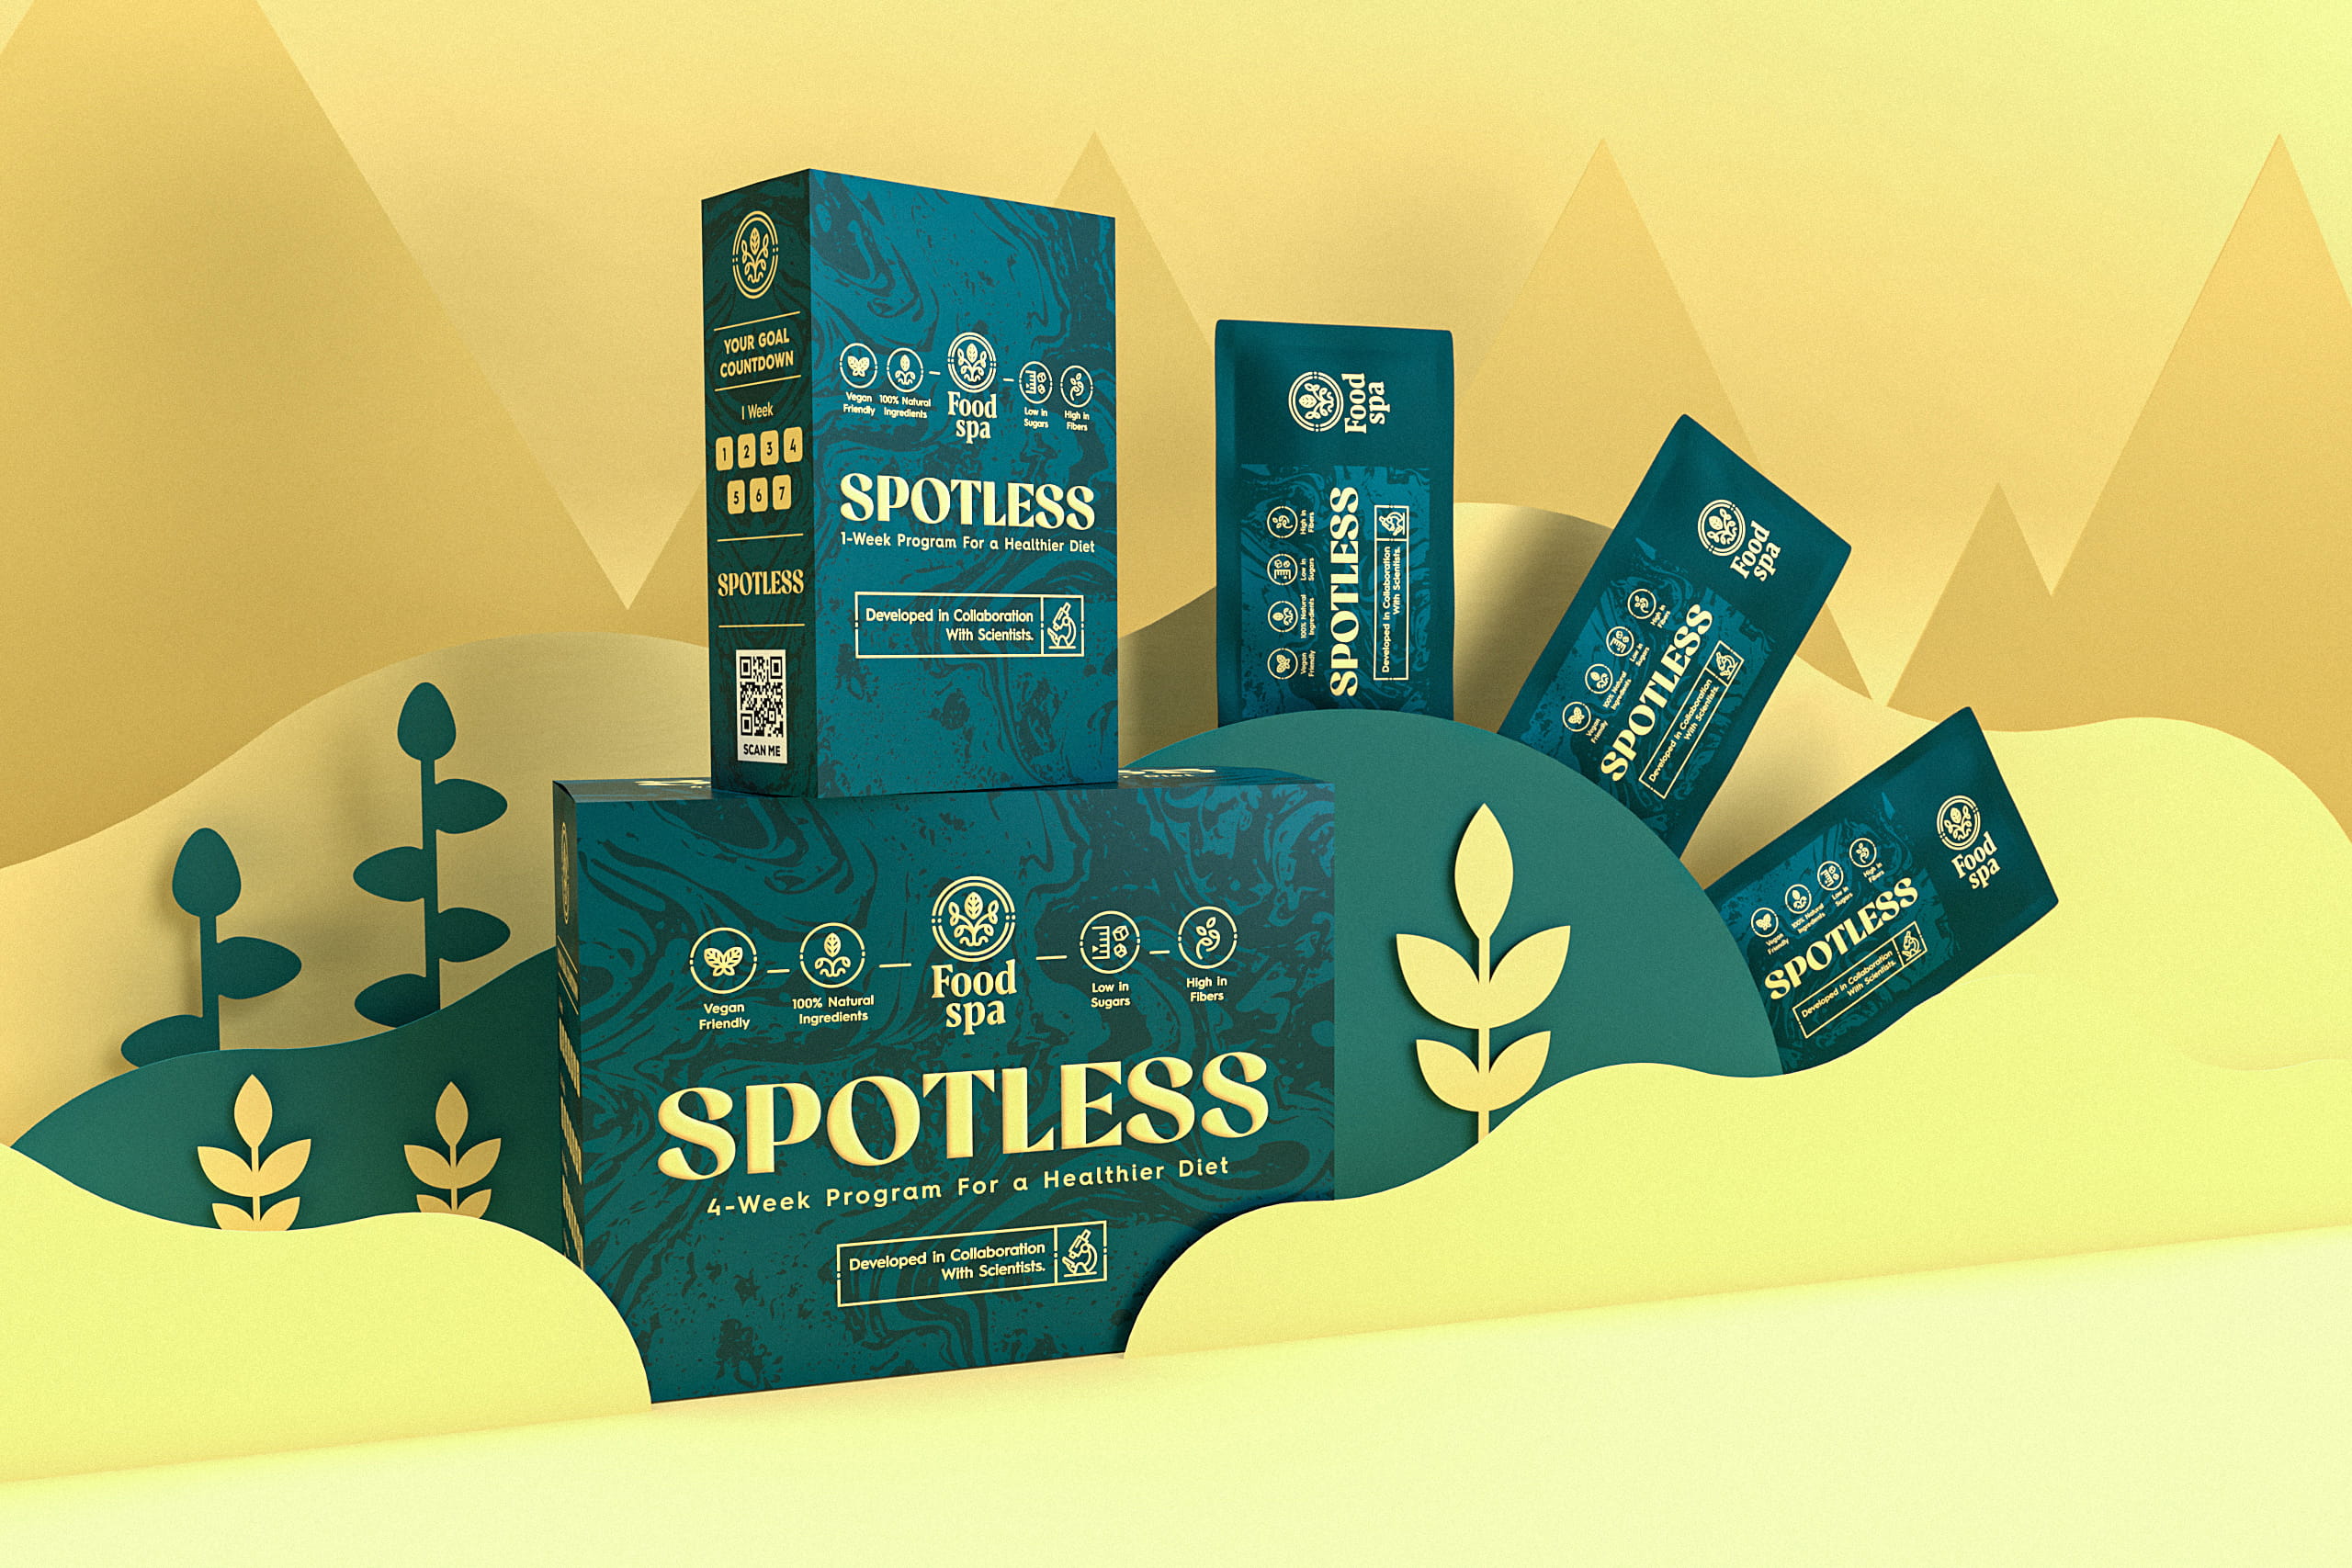 Food Spa Spotless Packaging Design